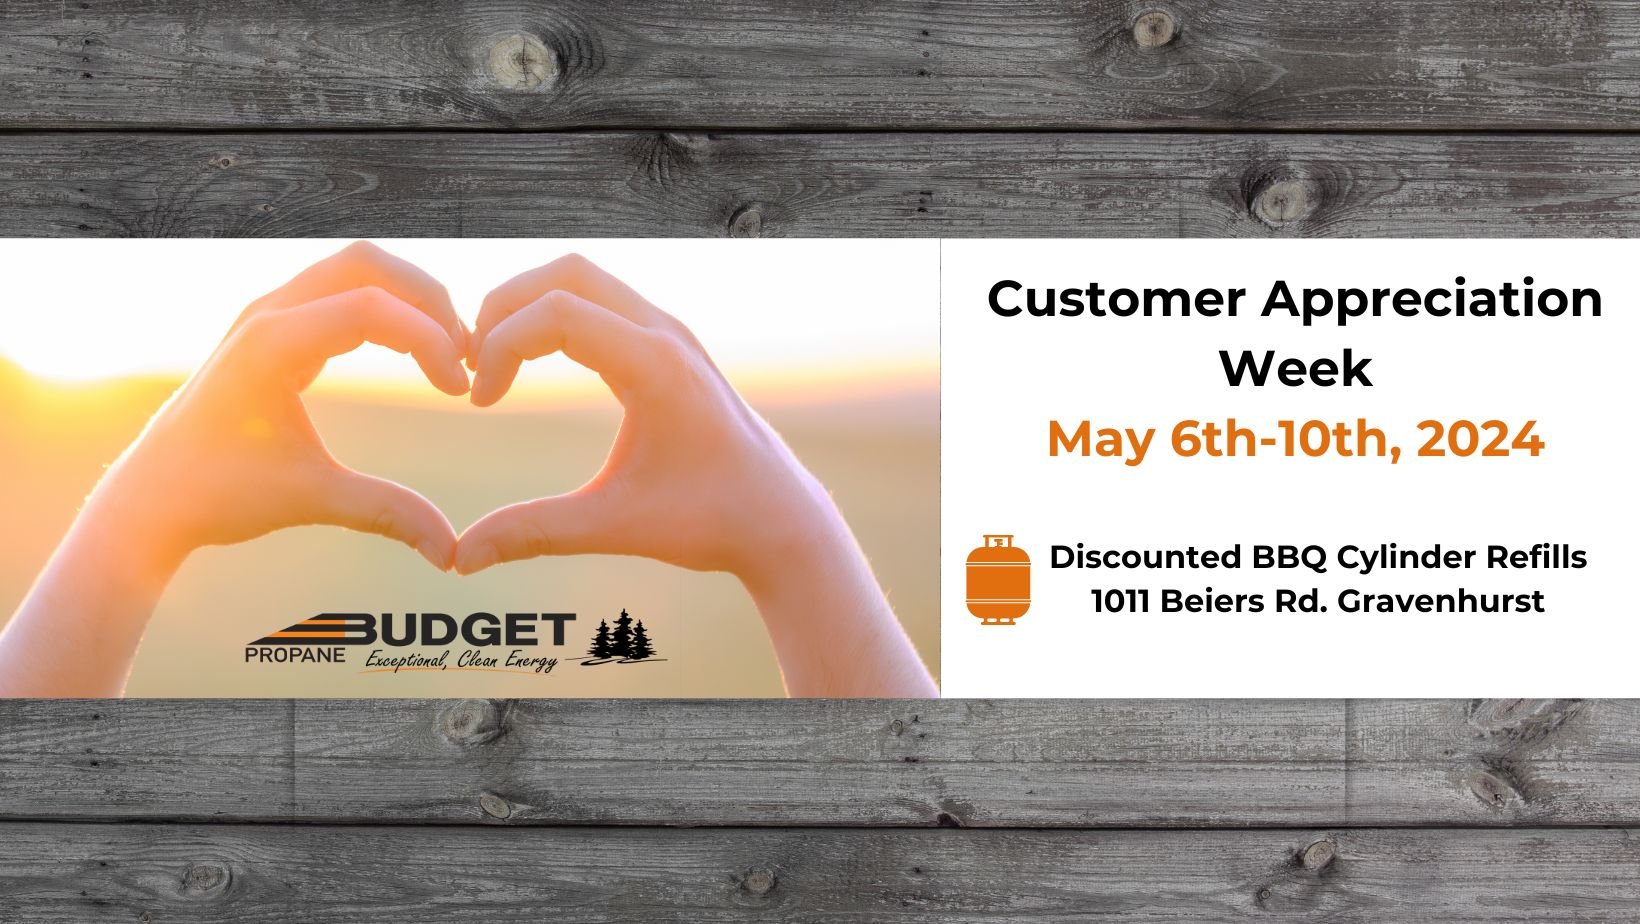 Budget Customer Appreciation Week 2024_Facebook Cover